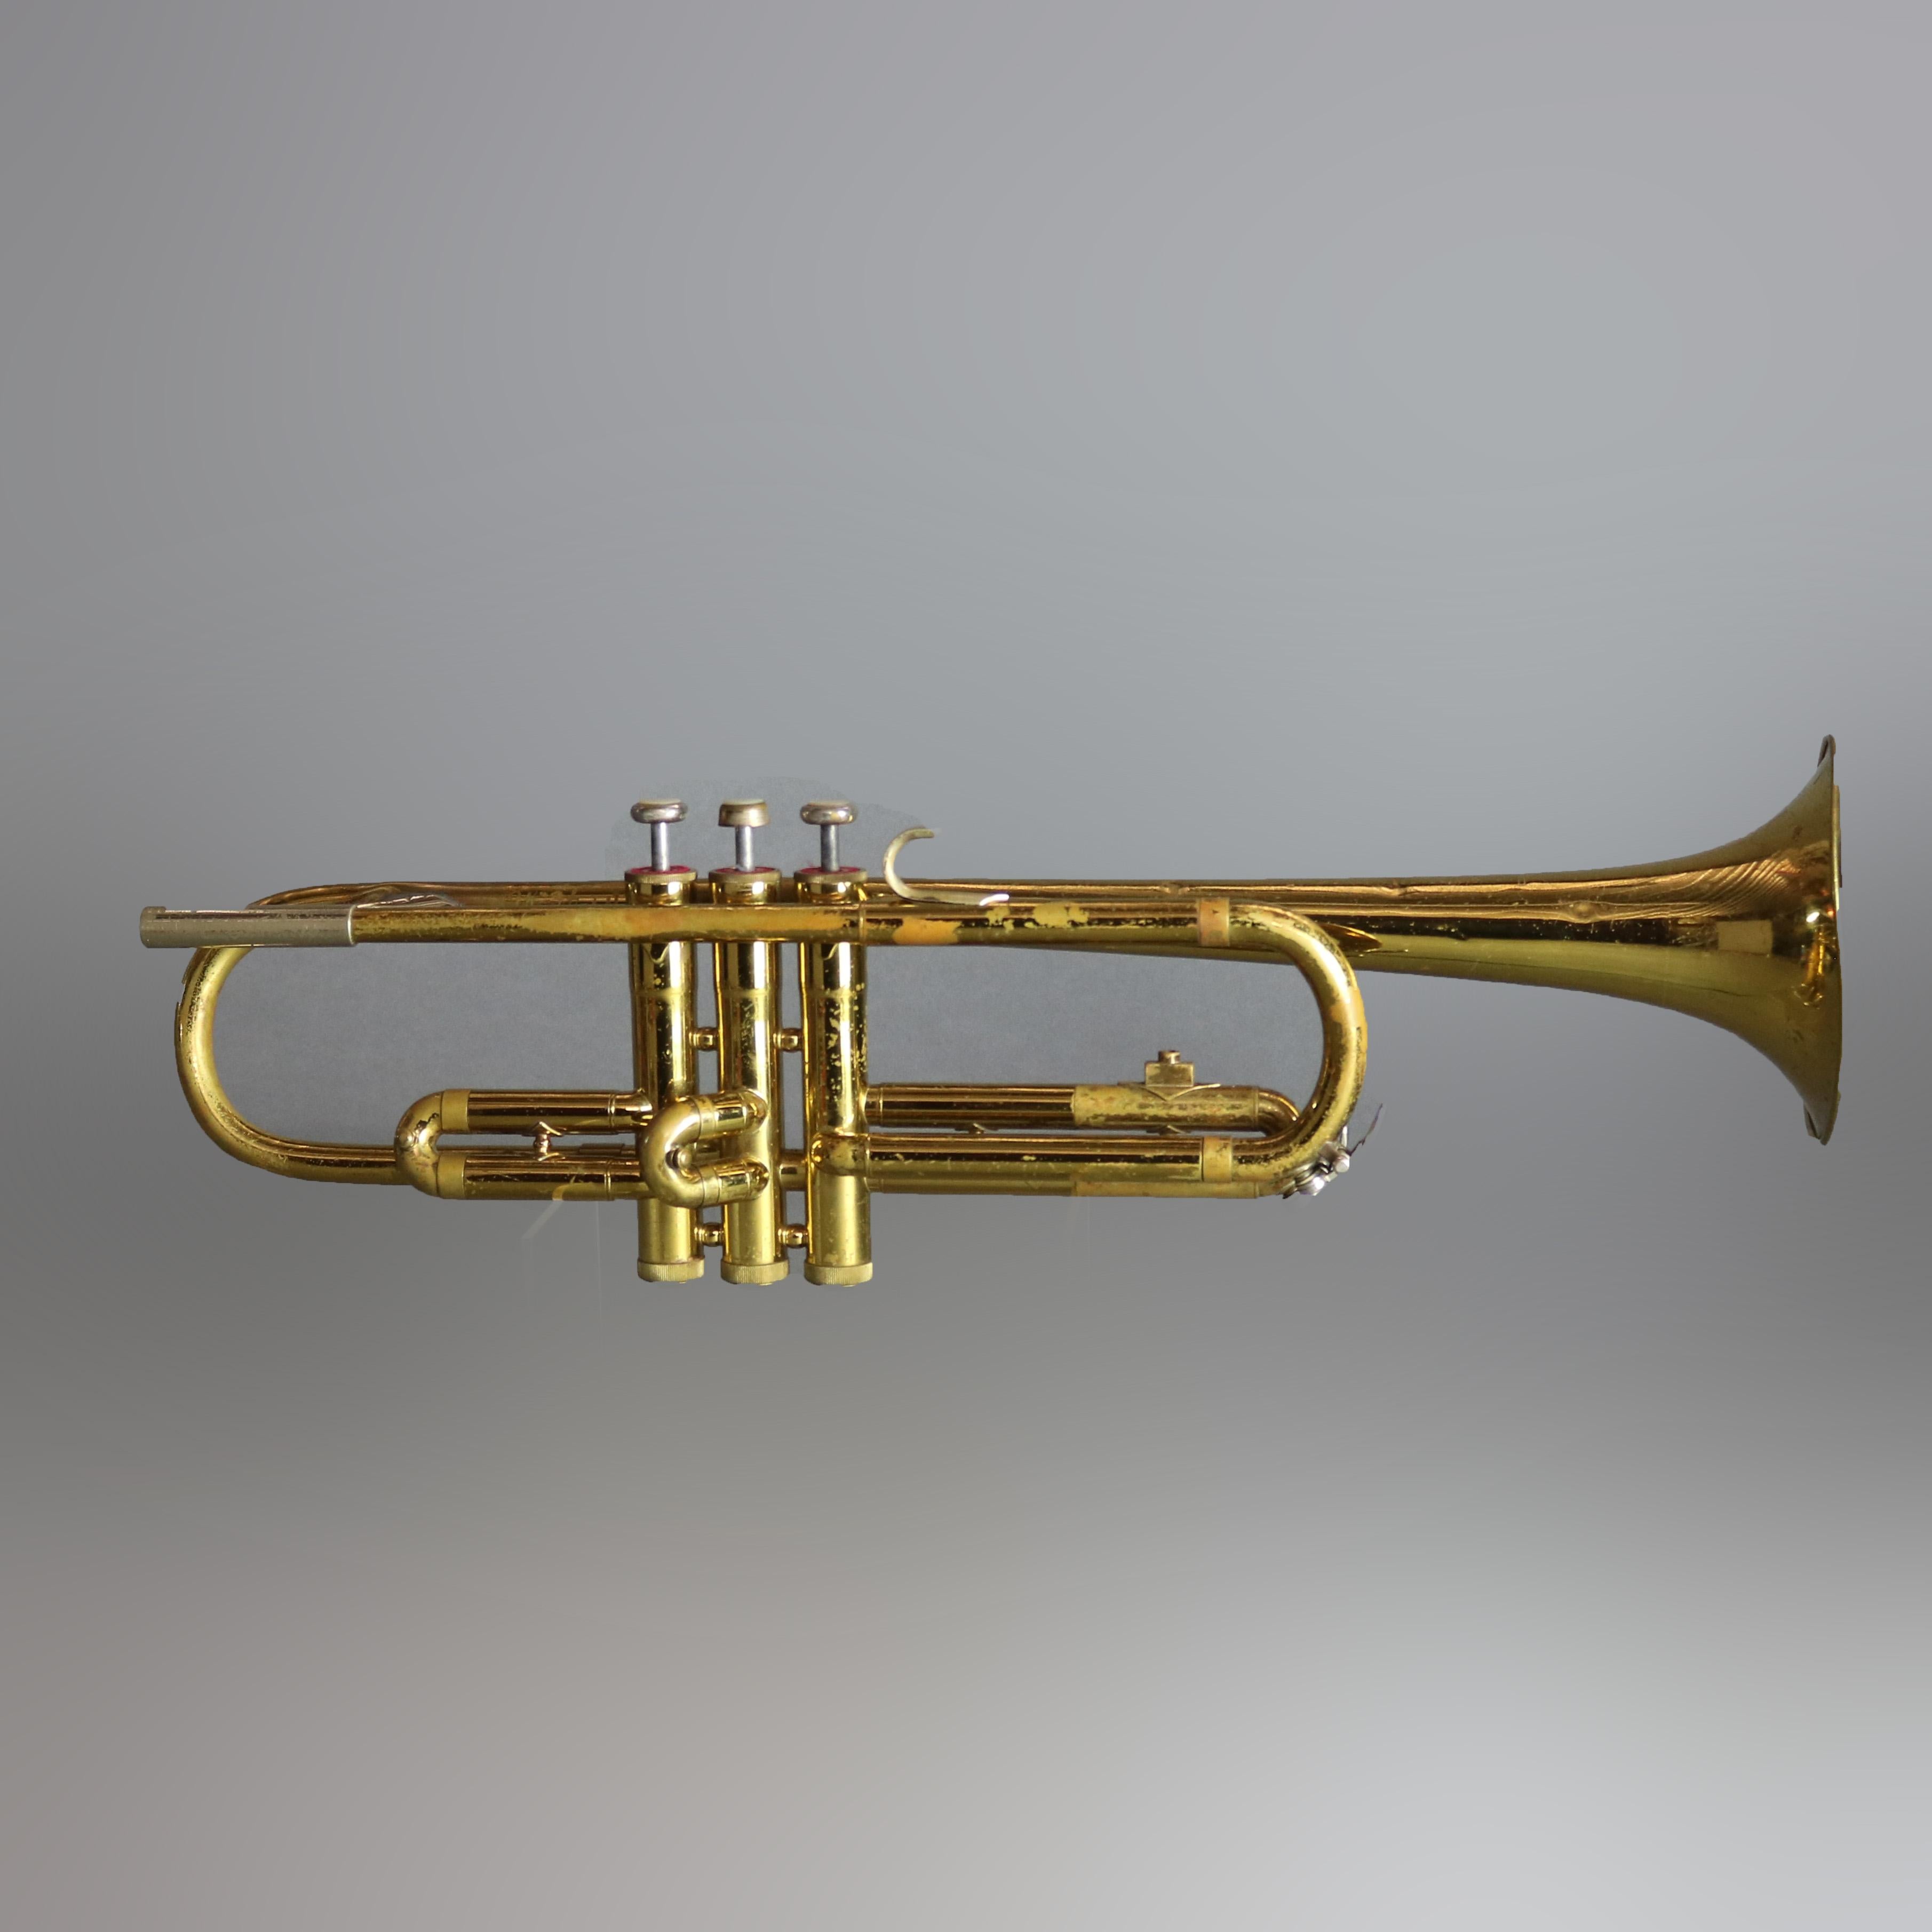 bundy trumpet price